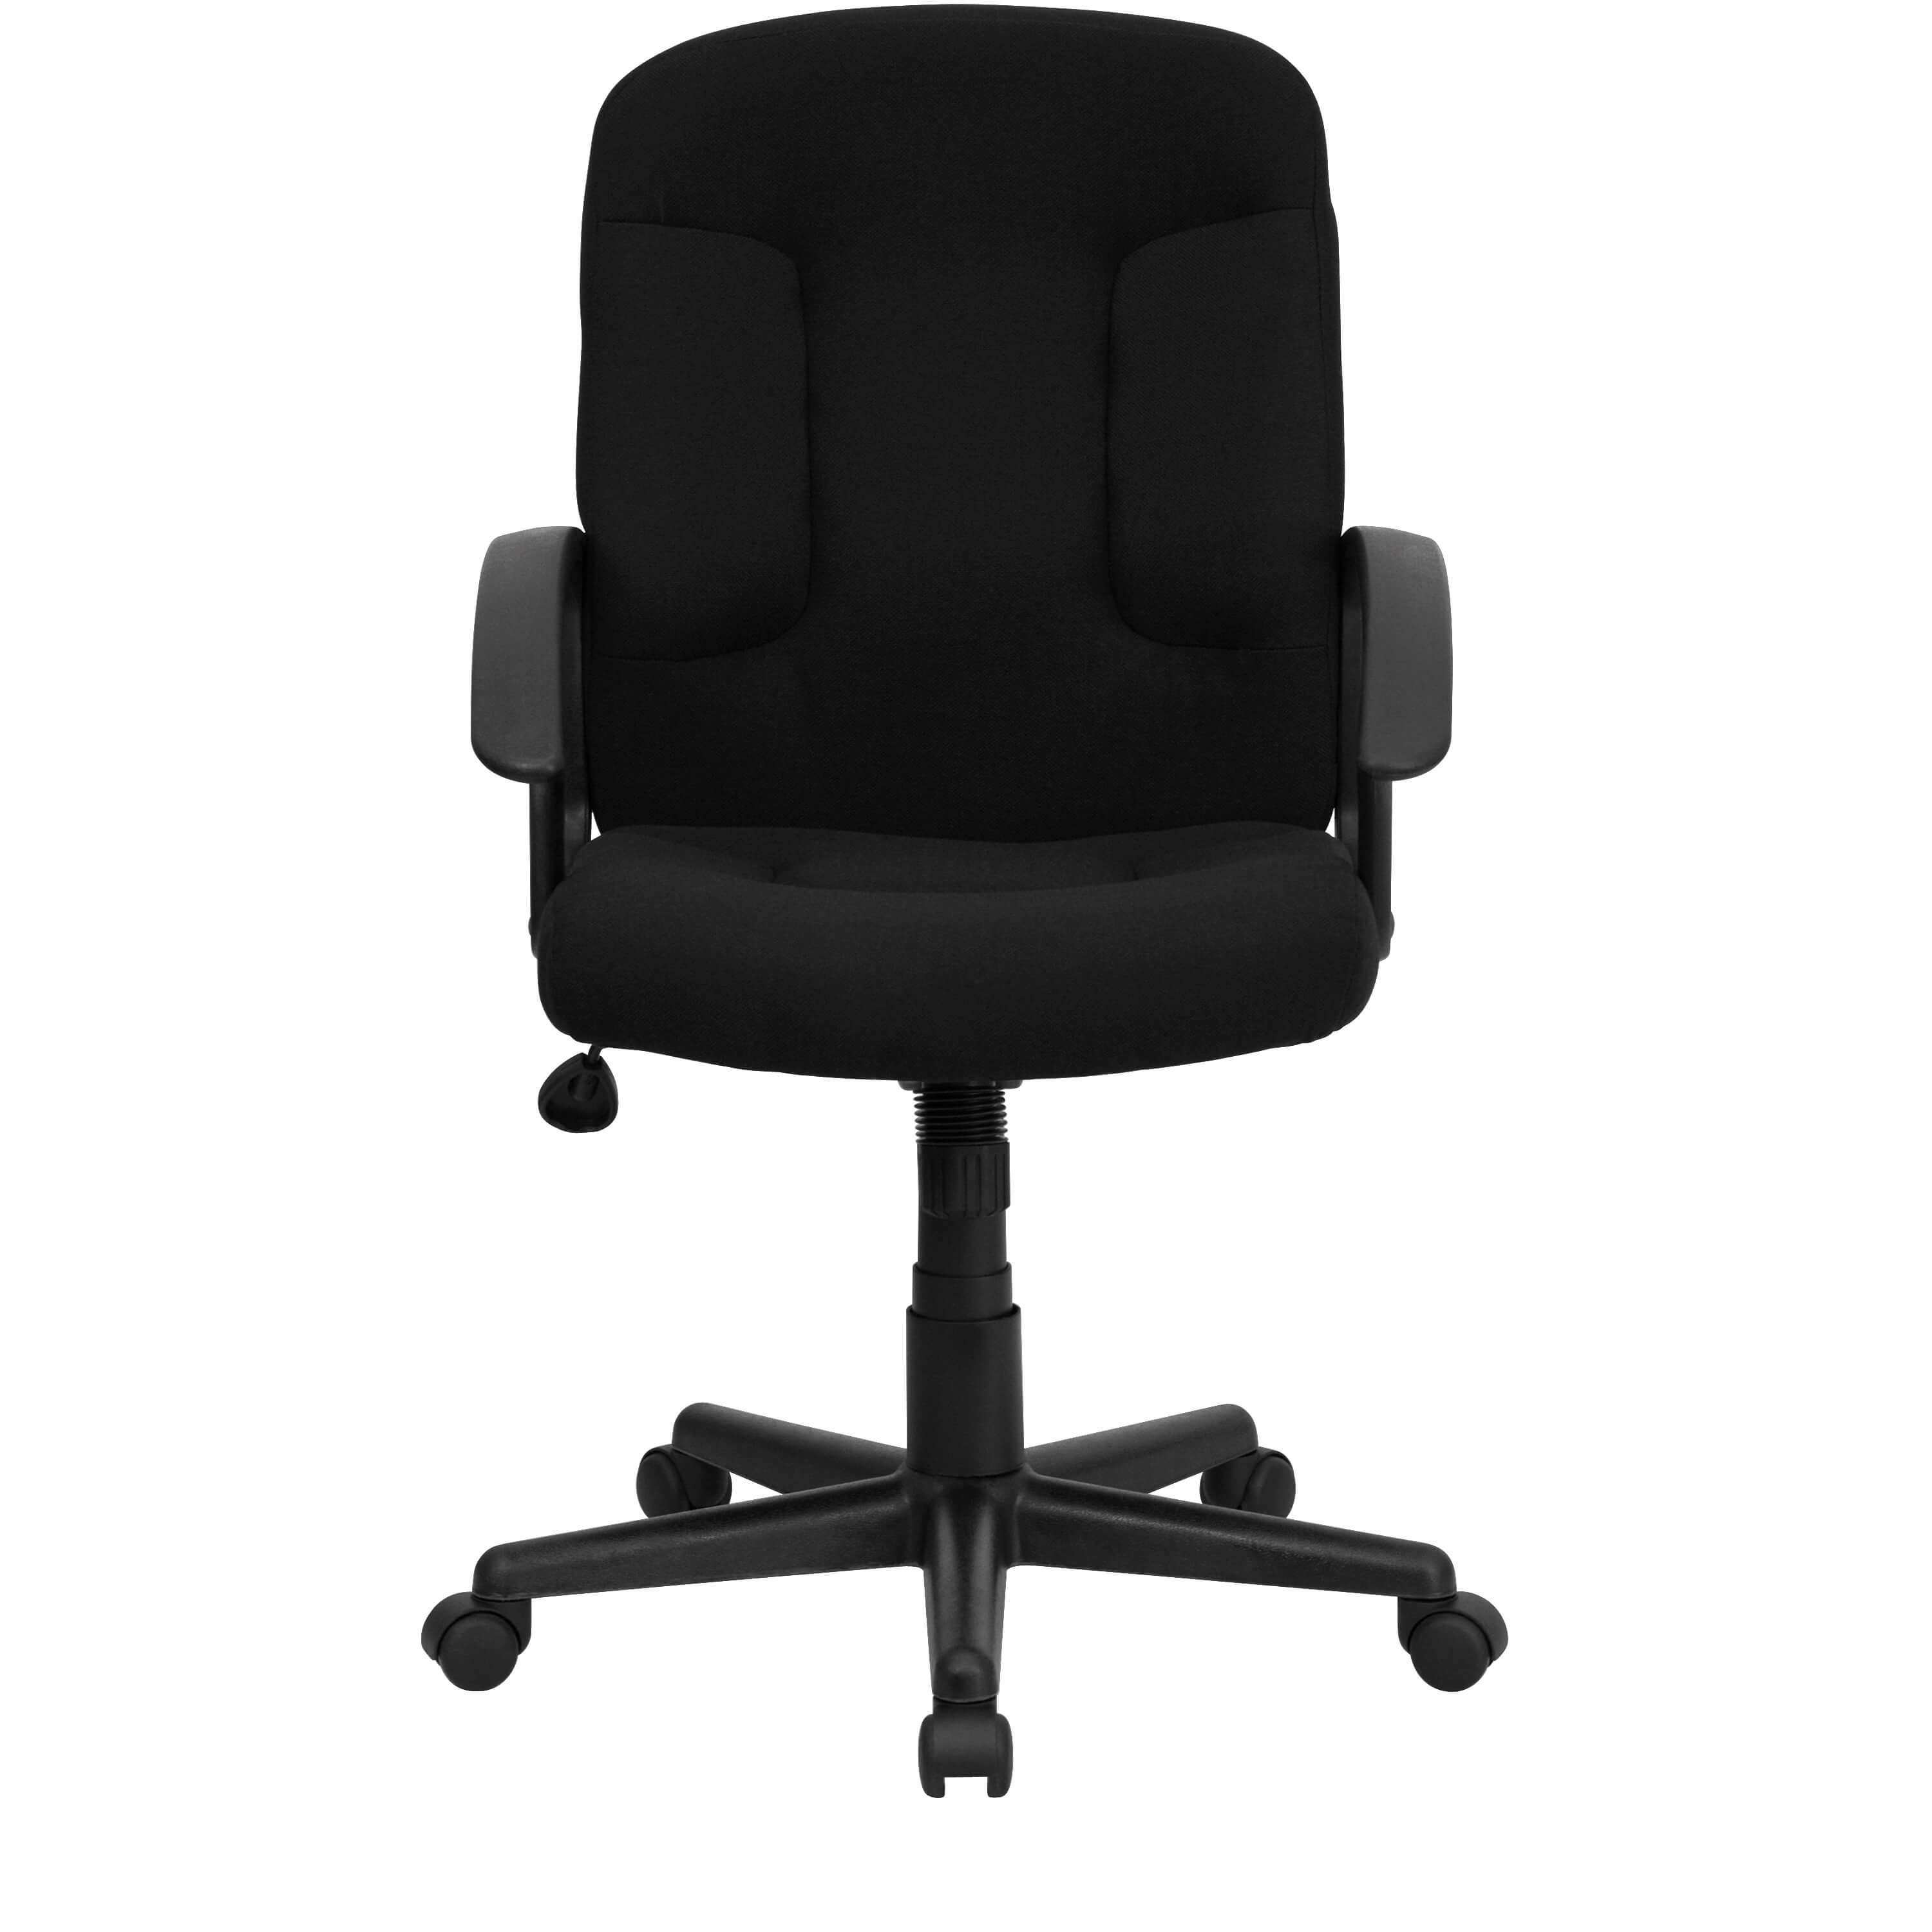 Cool desk chairs CUB GO ST 6 BK GG FLA